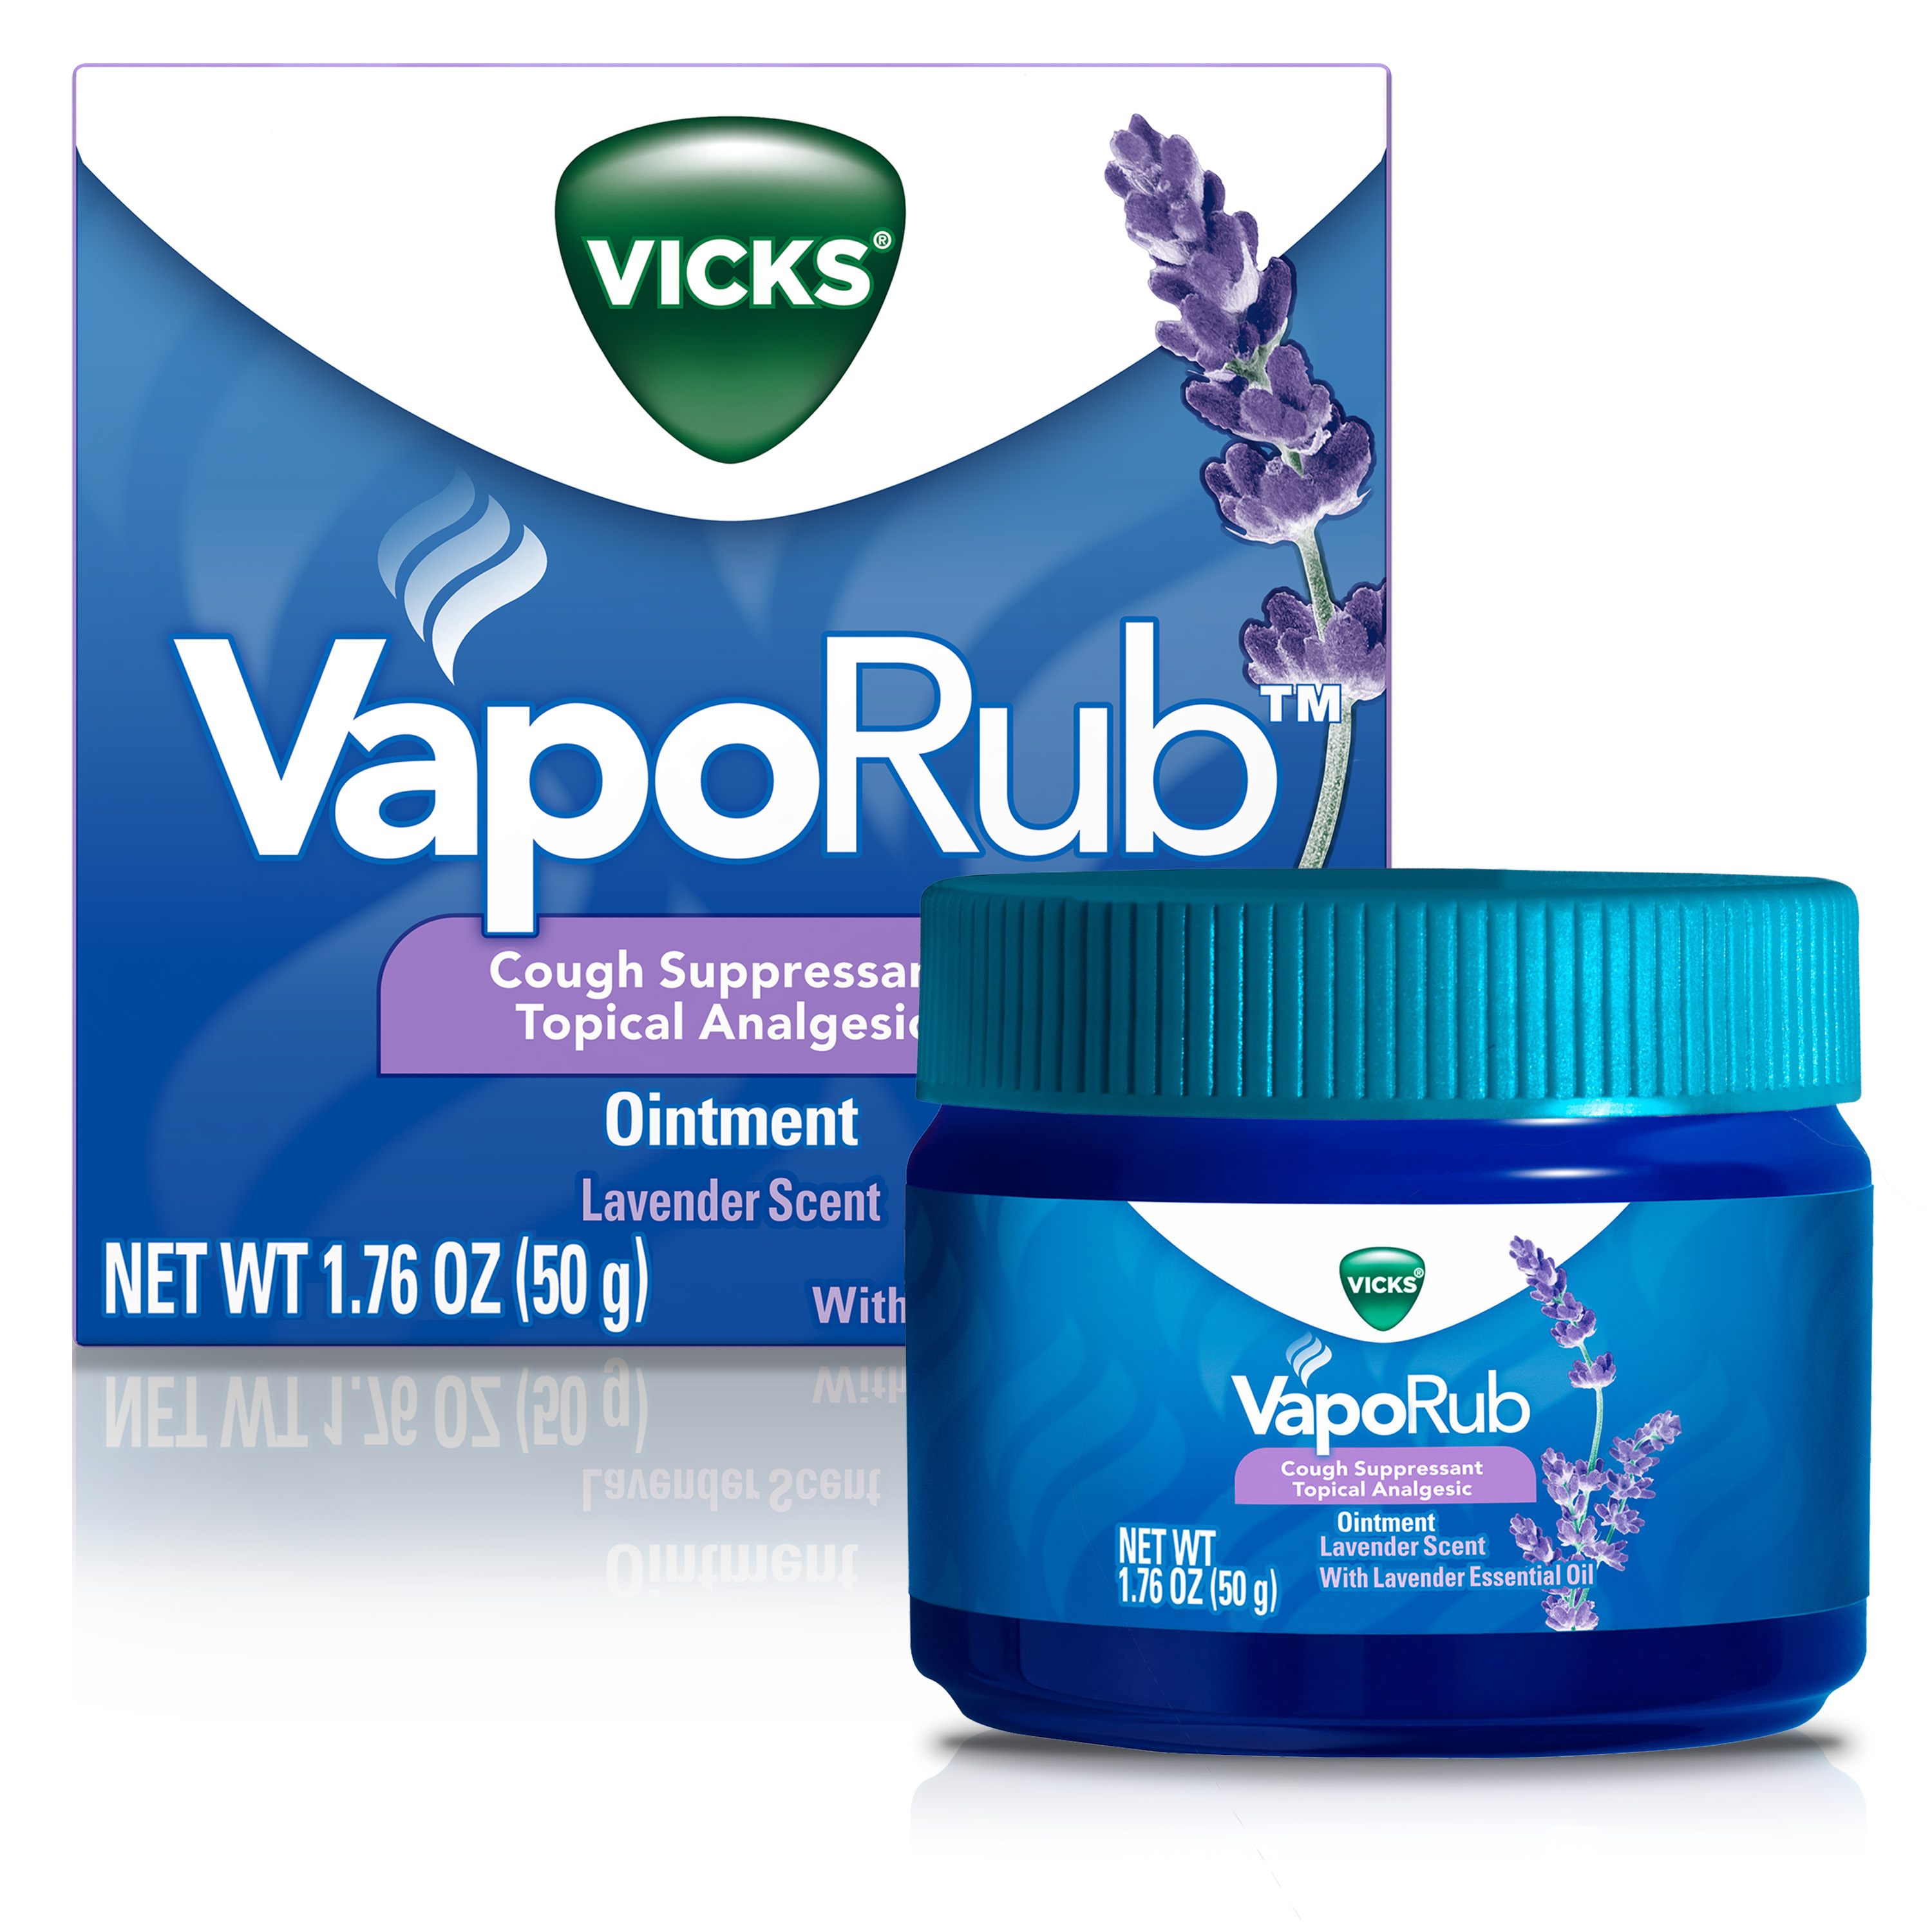 Vicks VapoRub, Lavender Scent, Cough Suppressant, Topical Chest Rub & Analgesic Ointment, Medicated Vicks Vapors, 1.76 oz - image 1 of 11